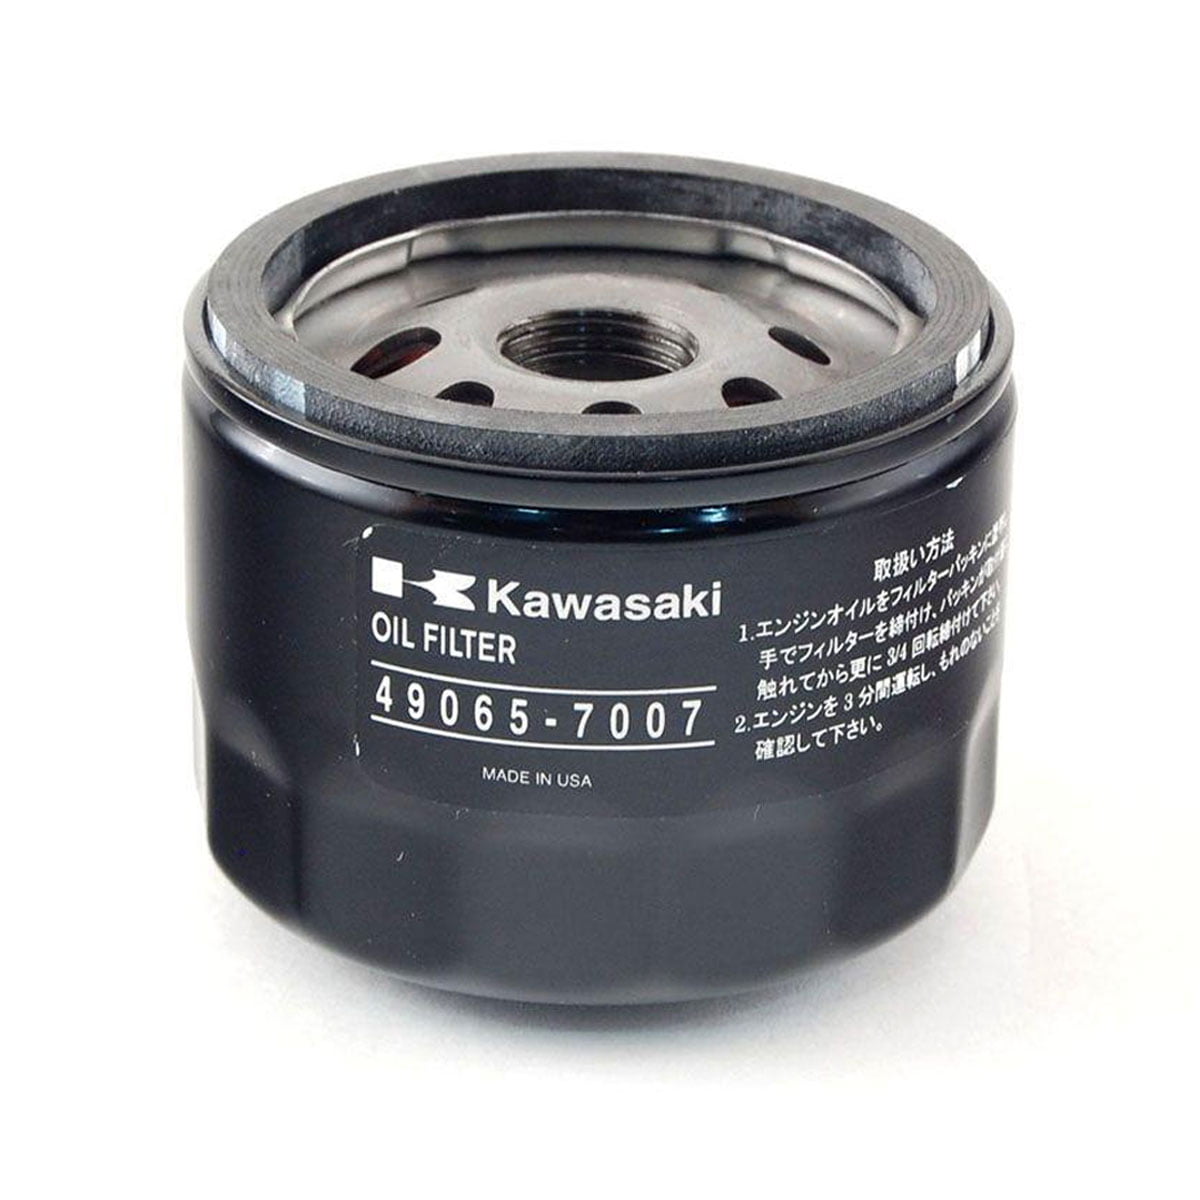 Kawasaki Oil Filter For Kawasaki 22-24 HP Engines, Fits most FR / FS / FX  engines